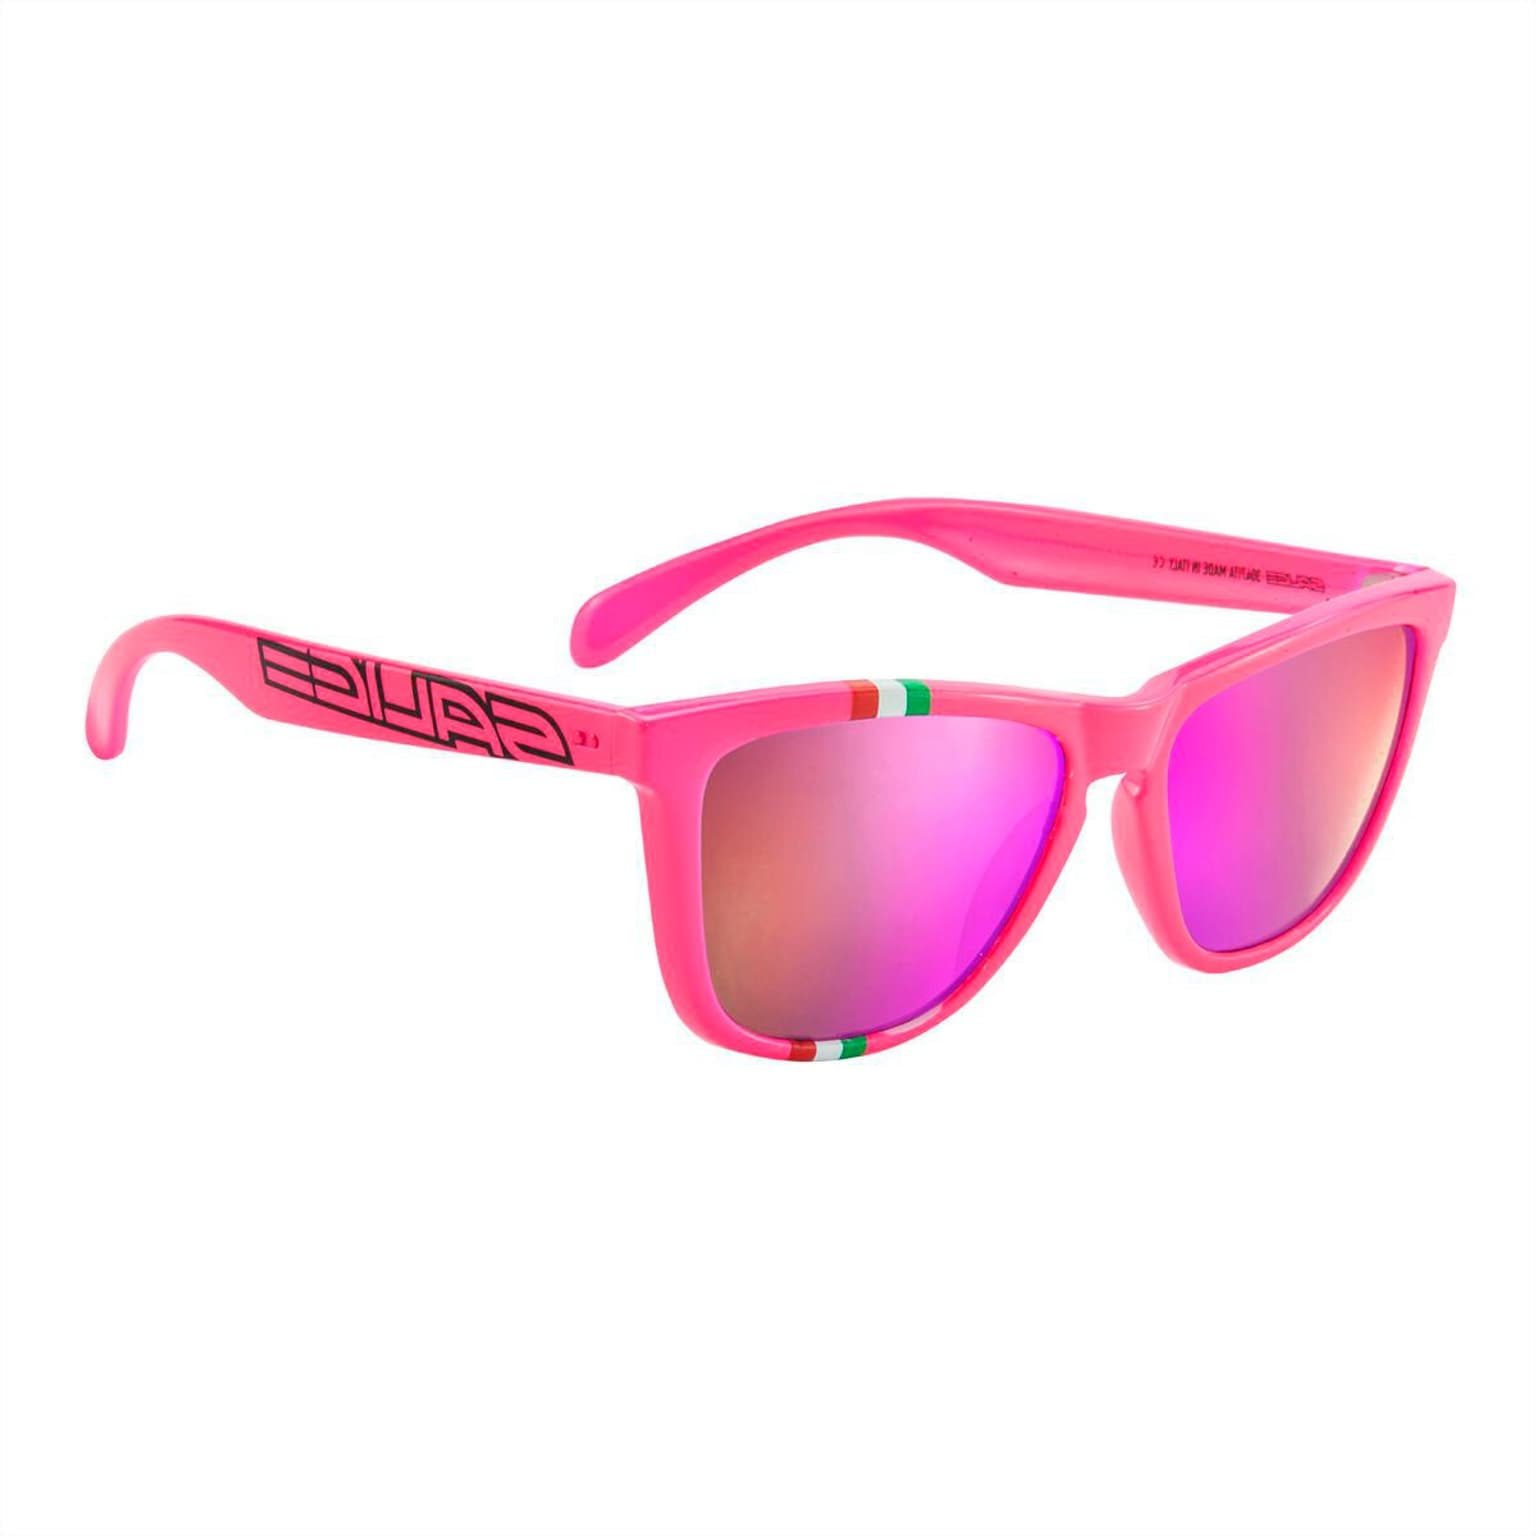 Salice Salice 3047RW Sportbrille pink 1